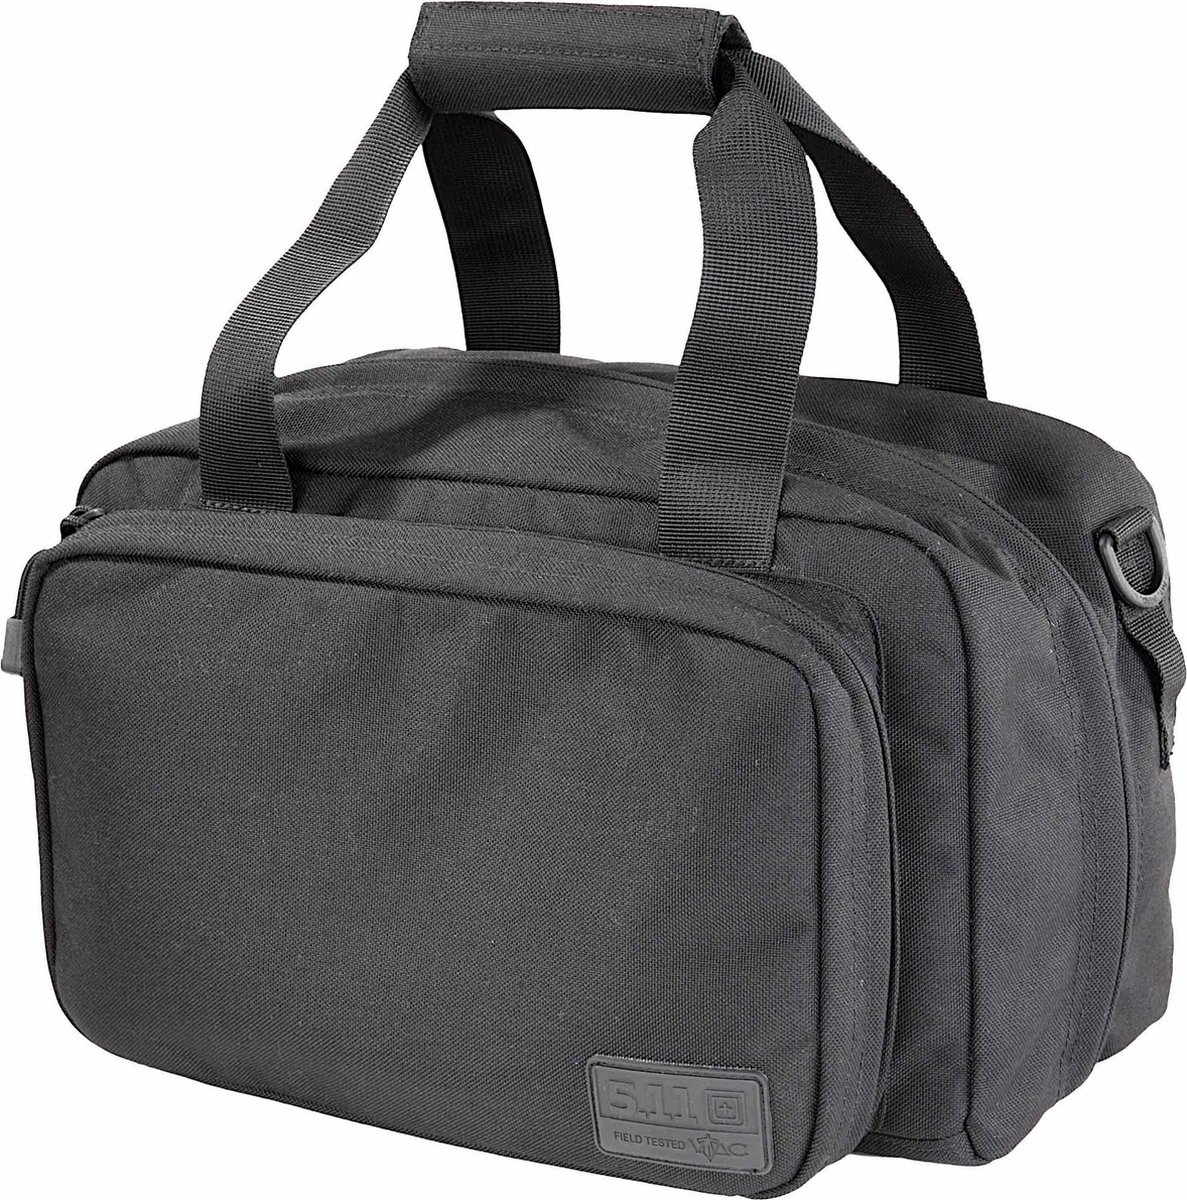 5.11 Tactical large kit tool bag 16L